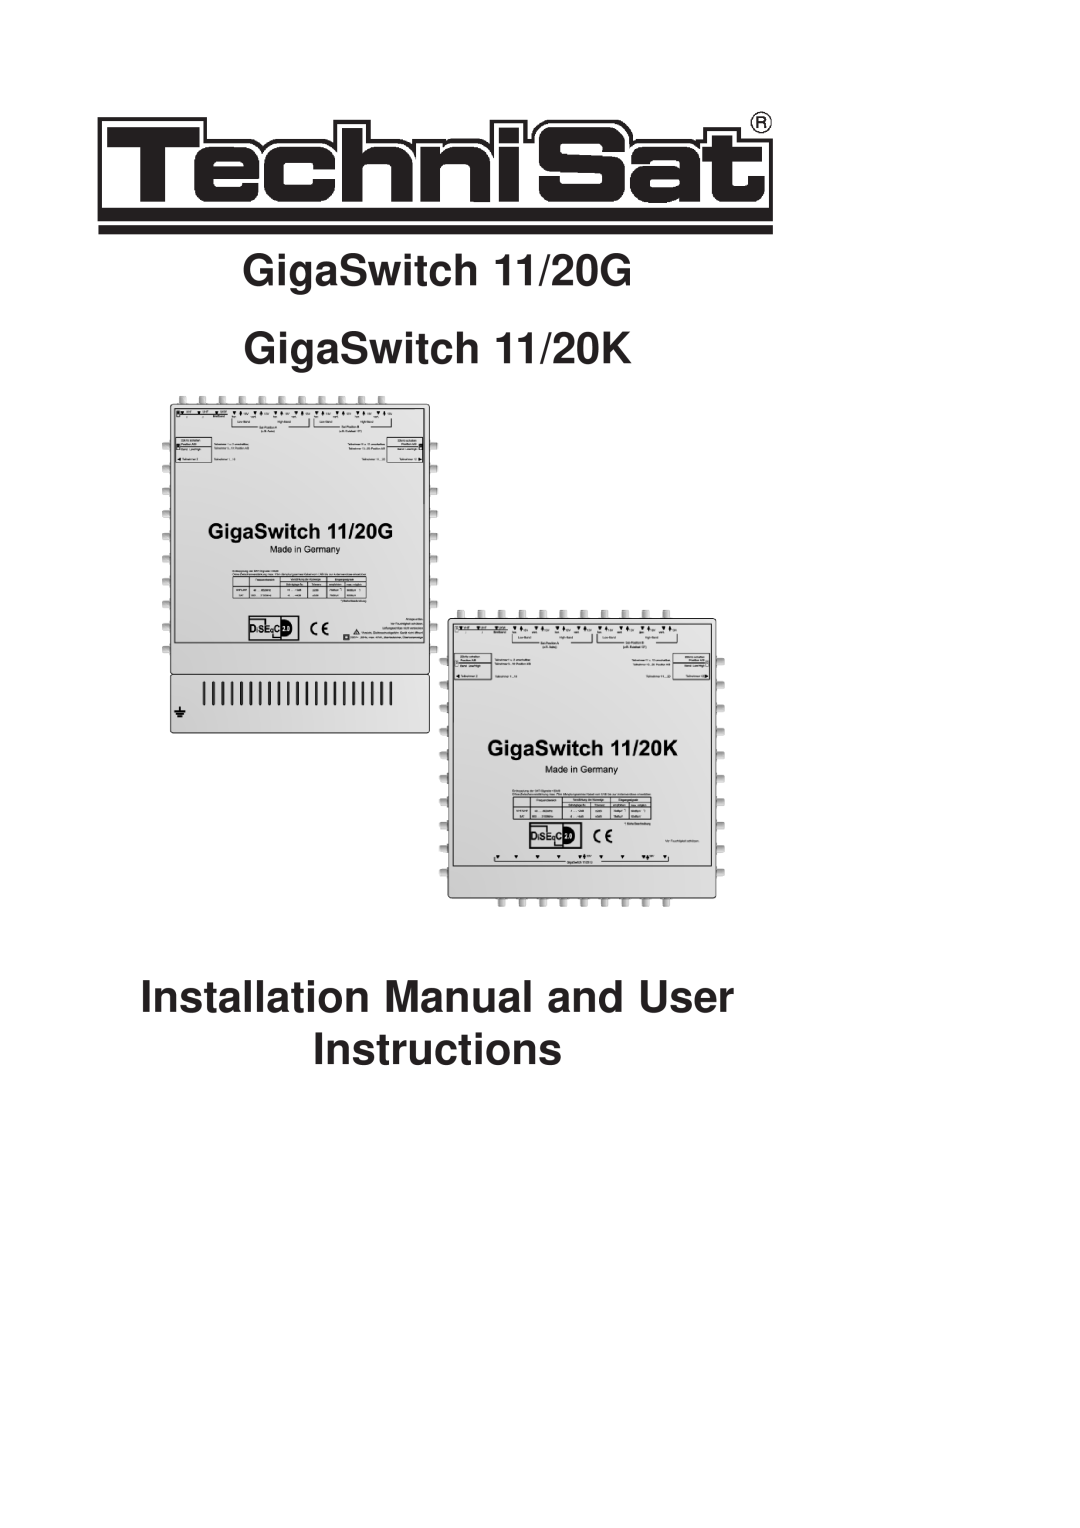 TechniSat installation manual GigaSwitch 11/20G, GigaSwitch 11/20K, Installation Manual and User Instructions 